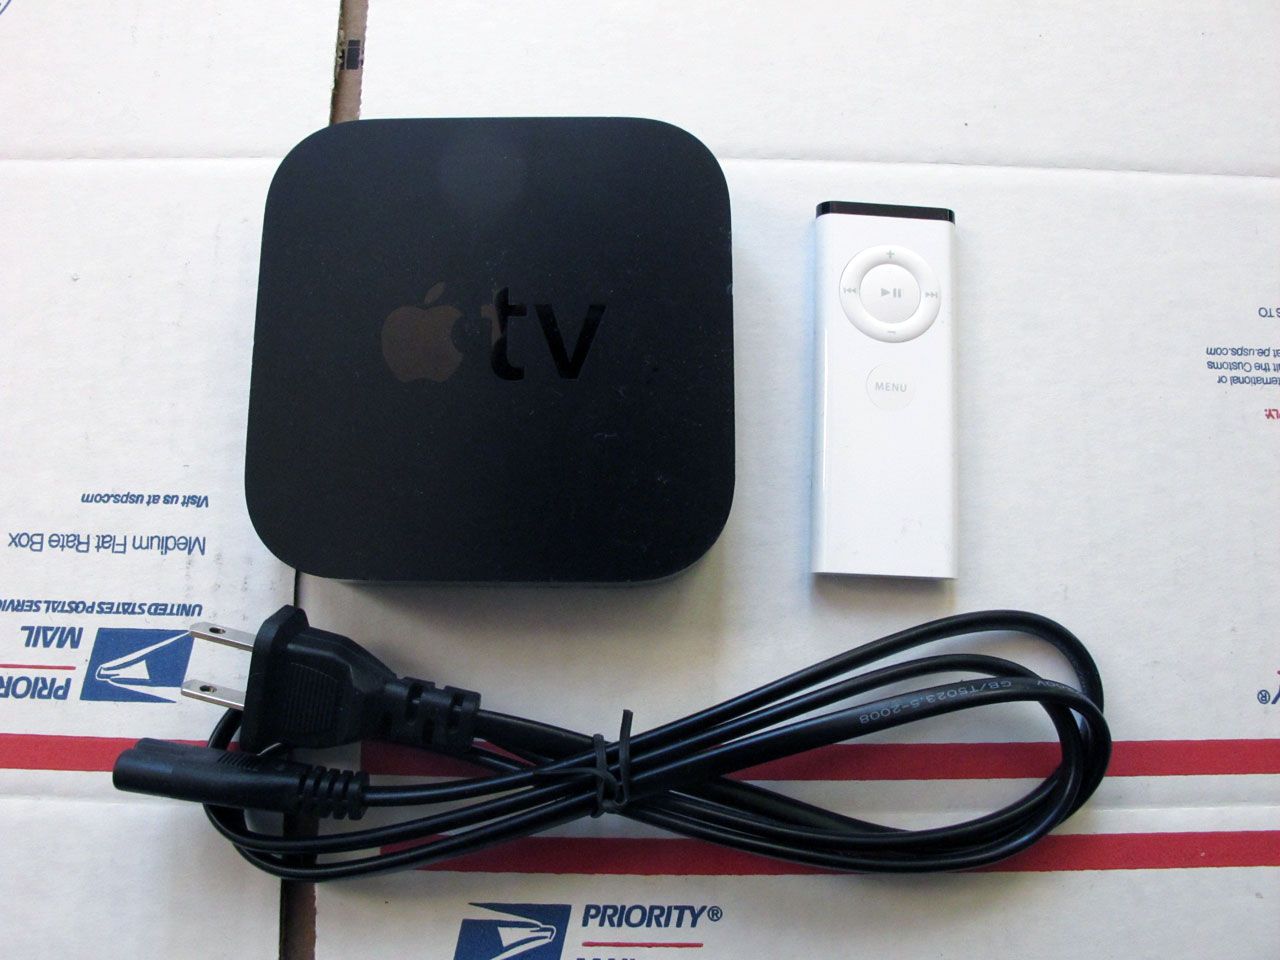 Jailbroken Apple TV 2nd Gen A1378 + remote + power cord